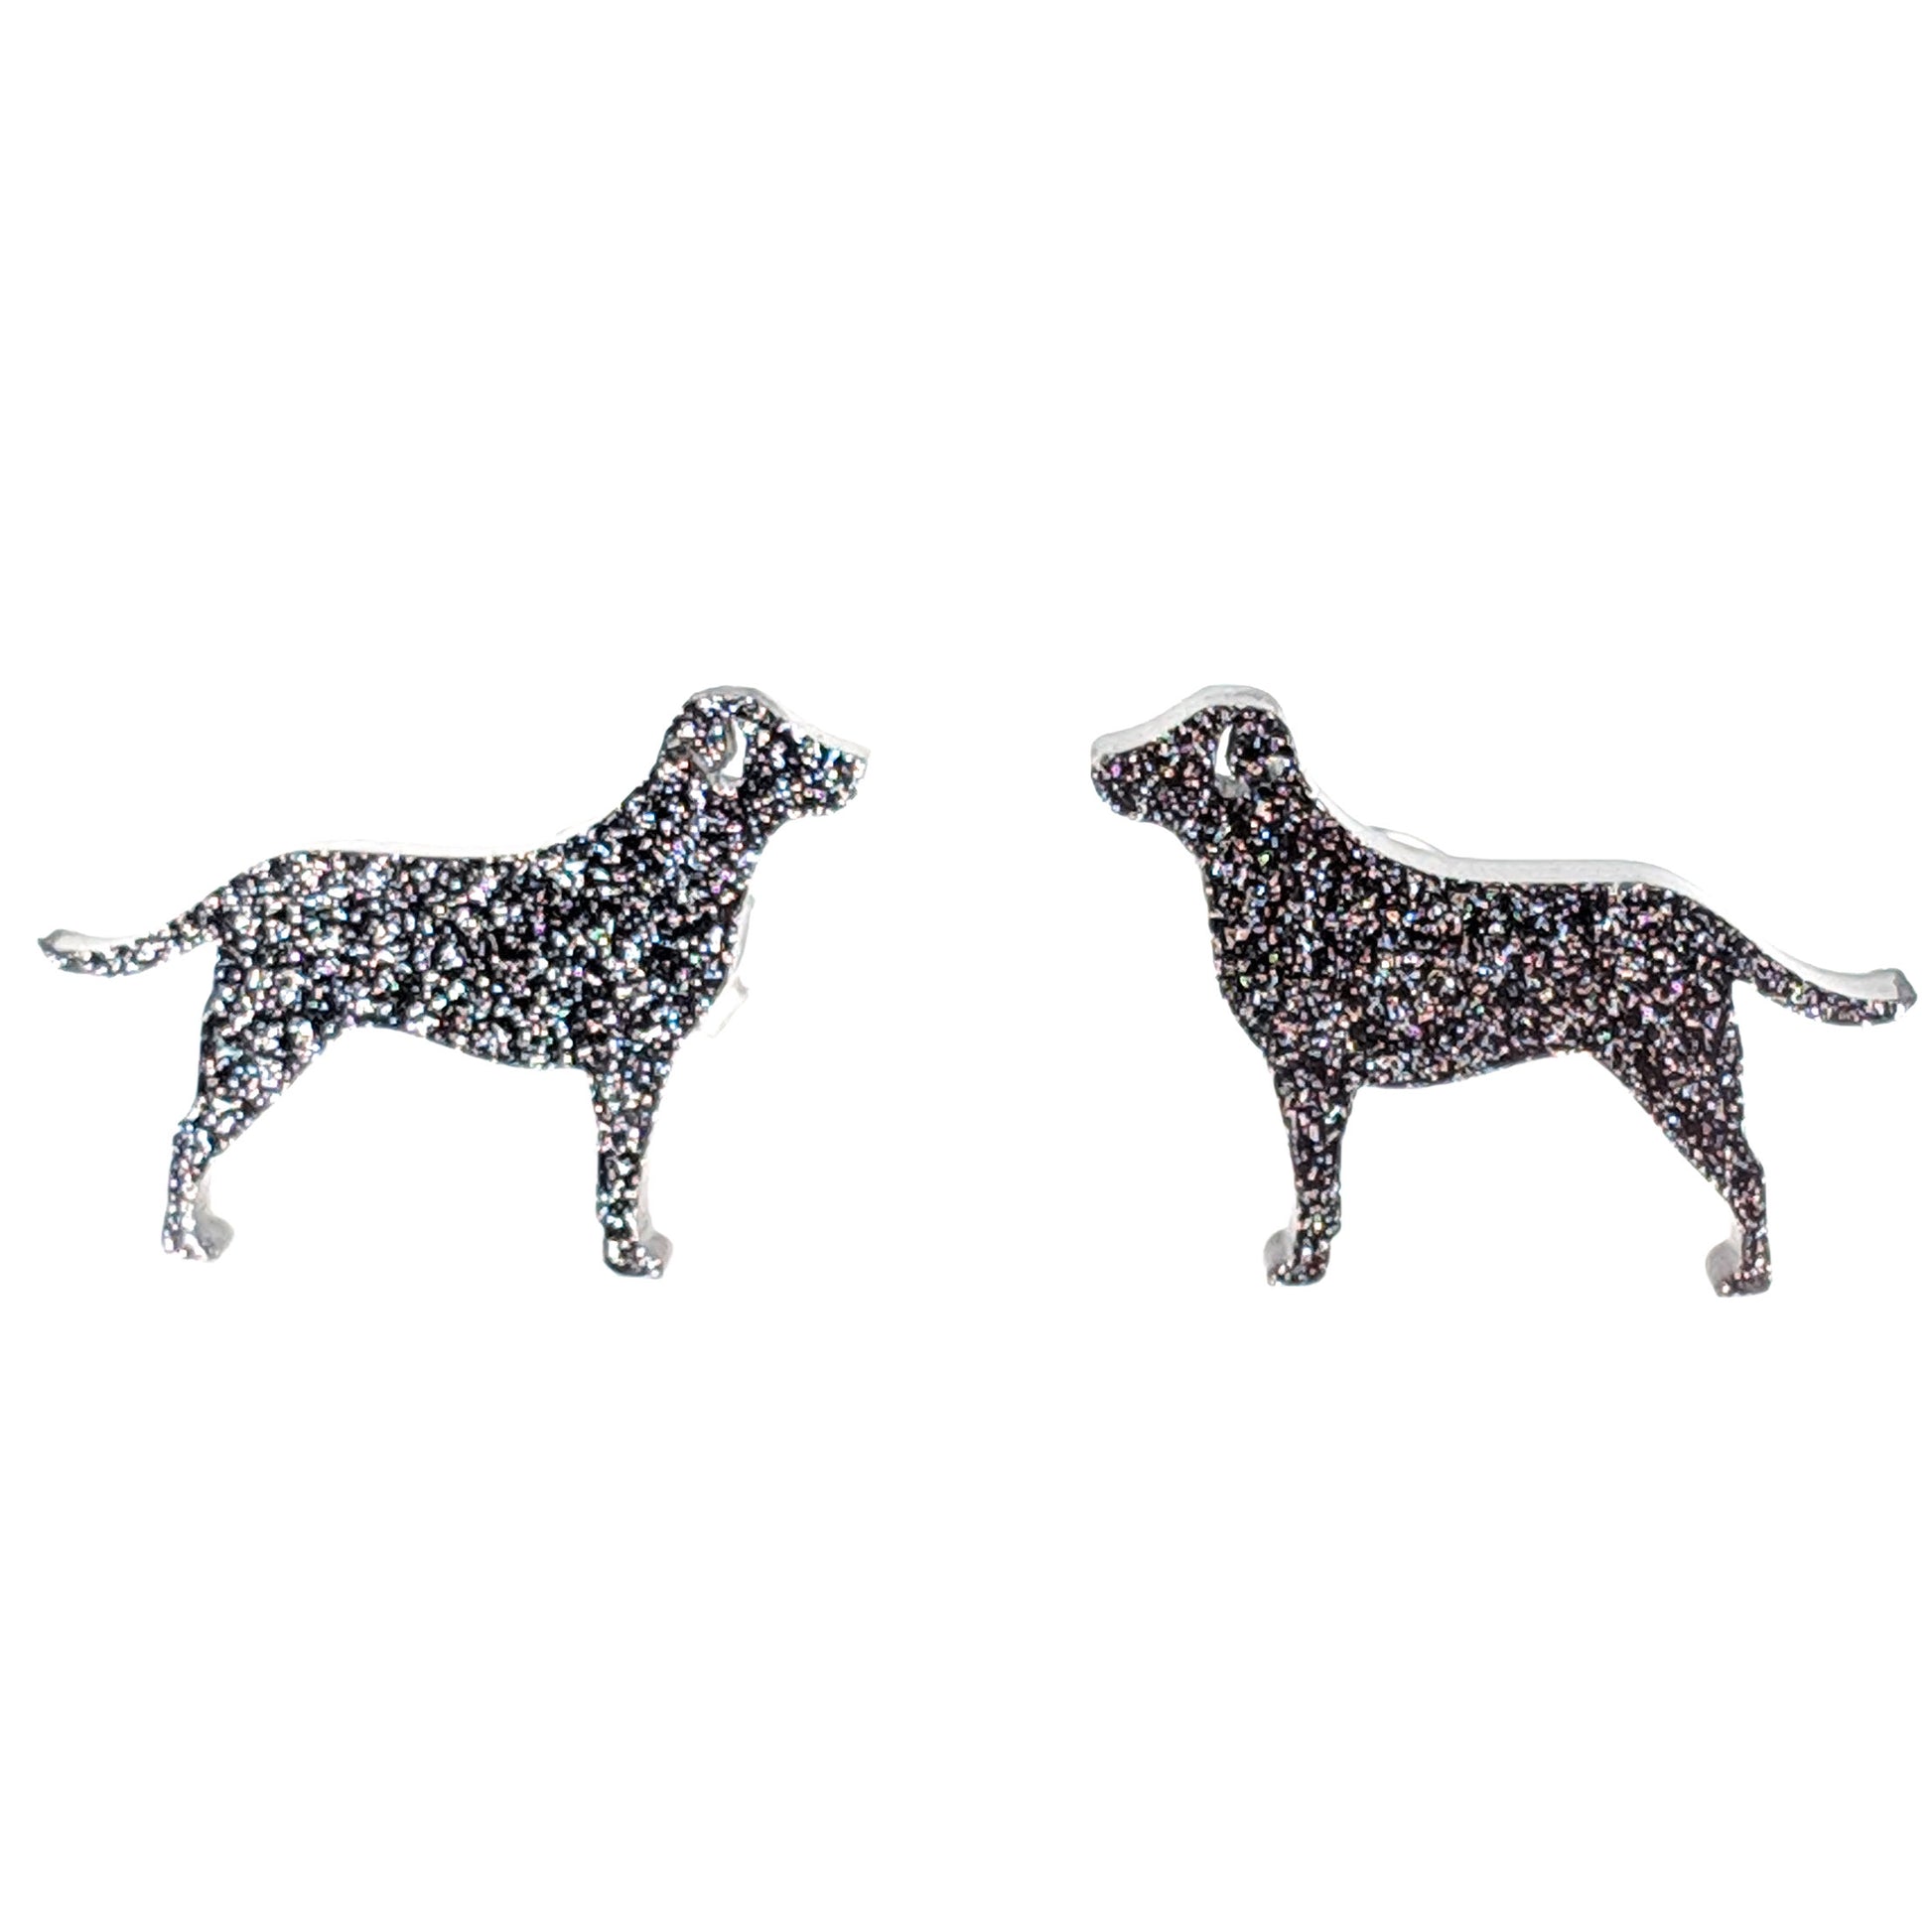 Labrador Retriever Dog Glitter Earrings (Studs) - black